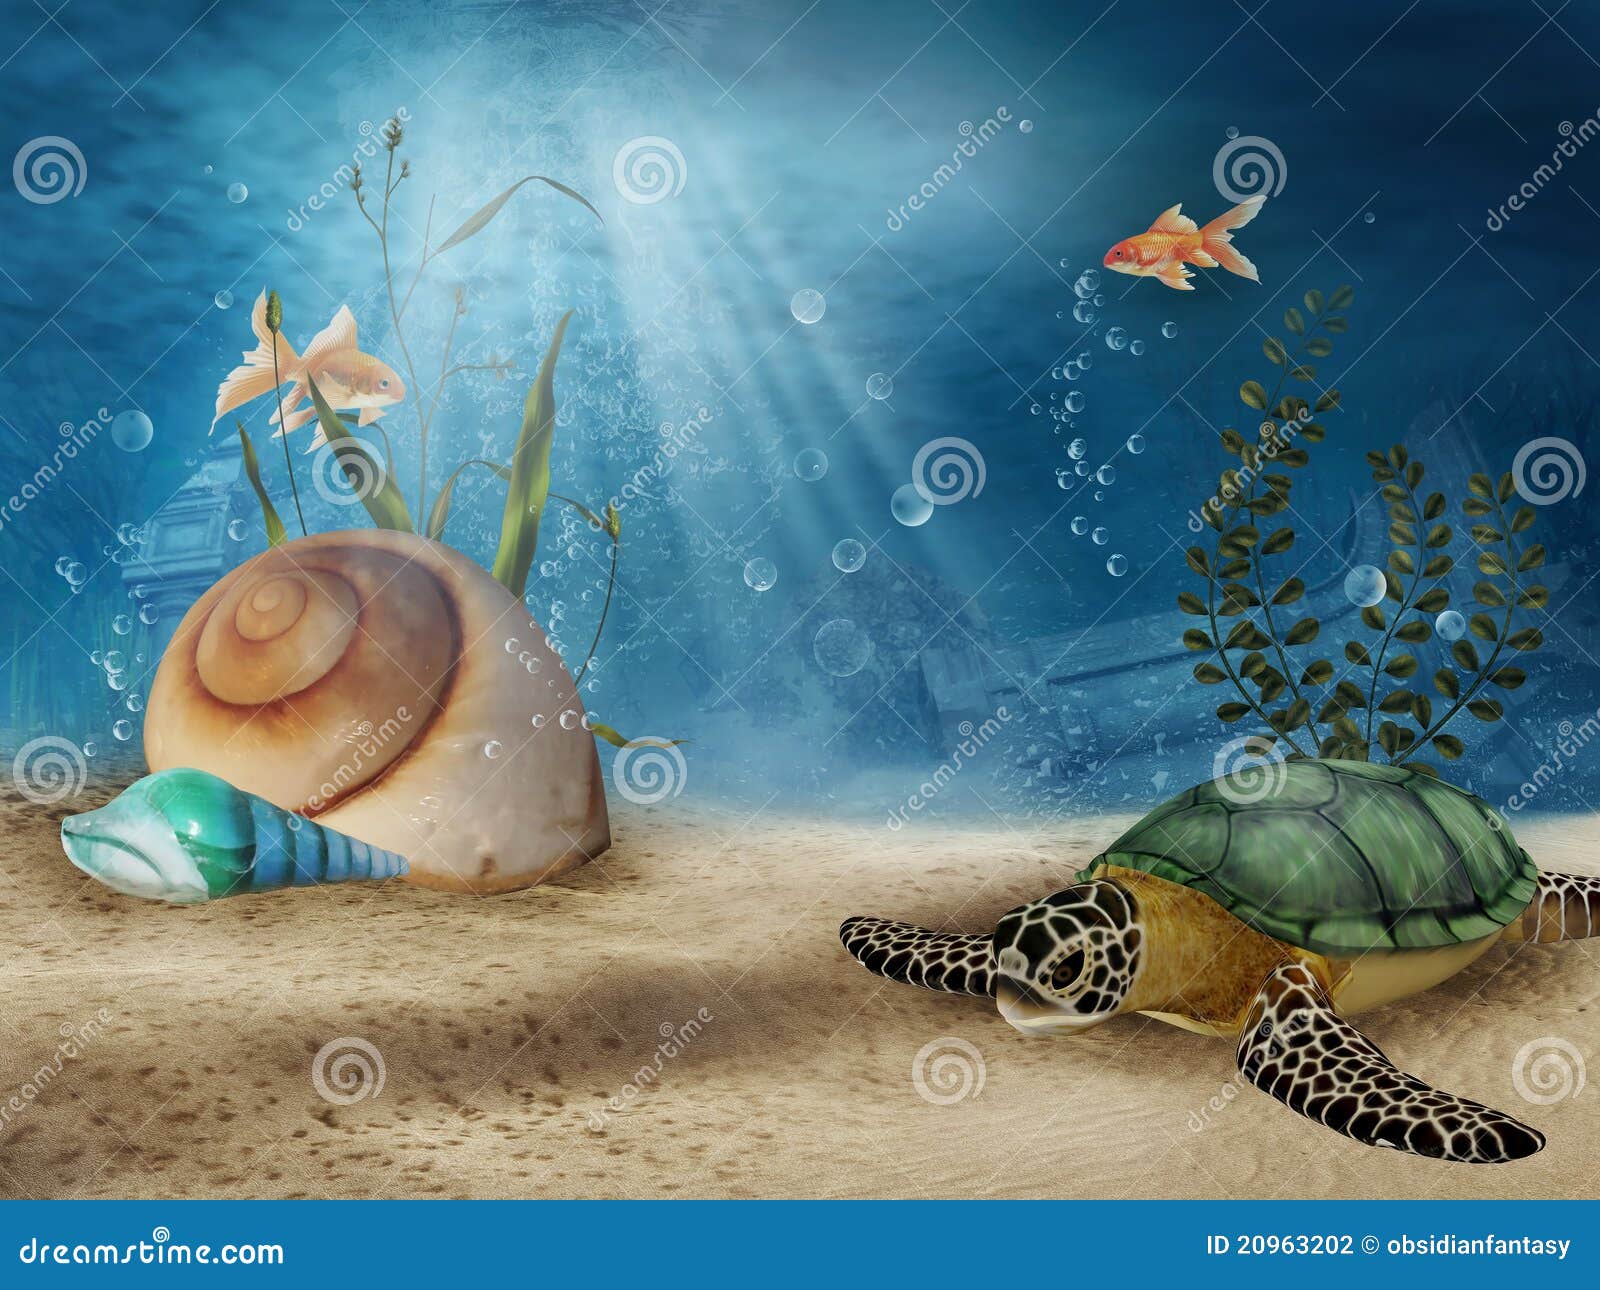 Underwater scenery with shells